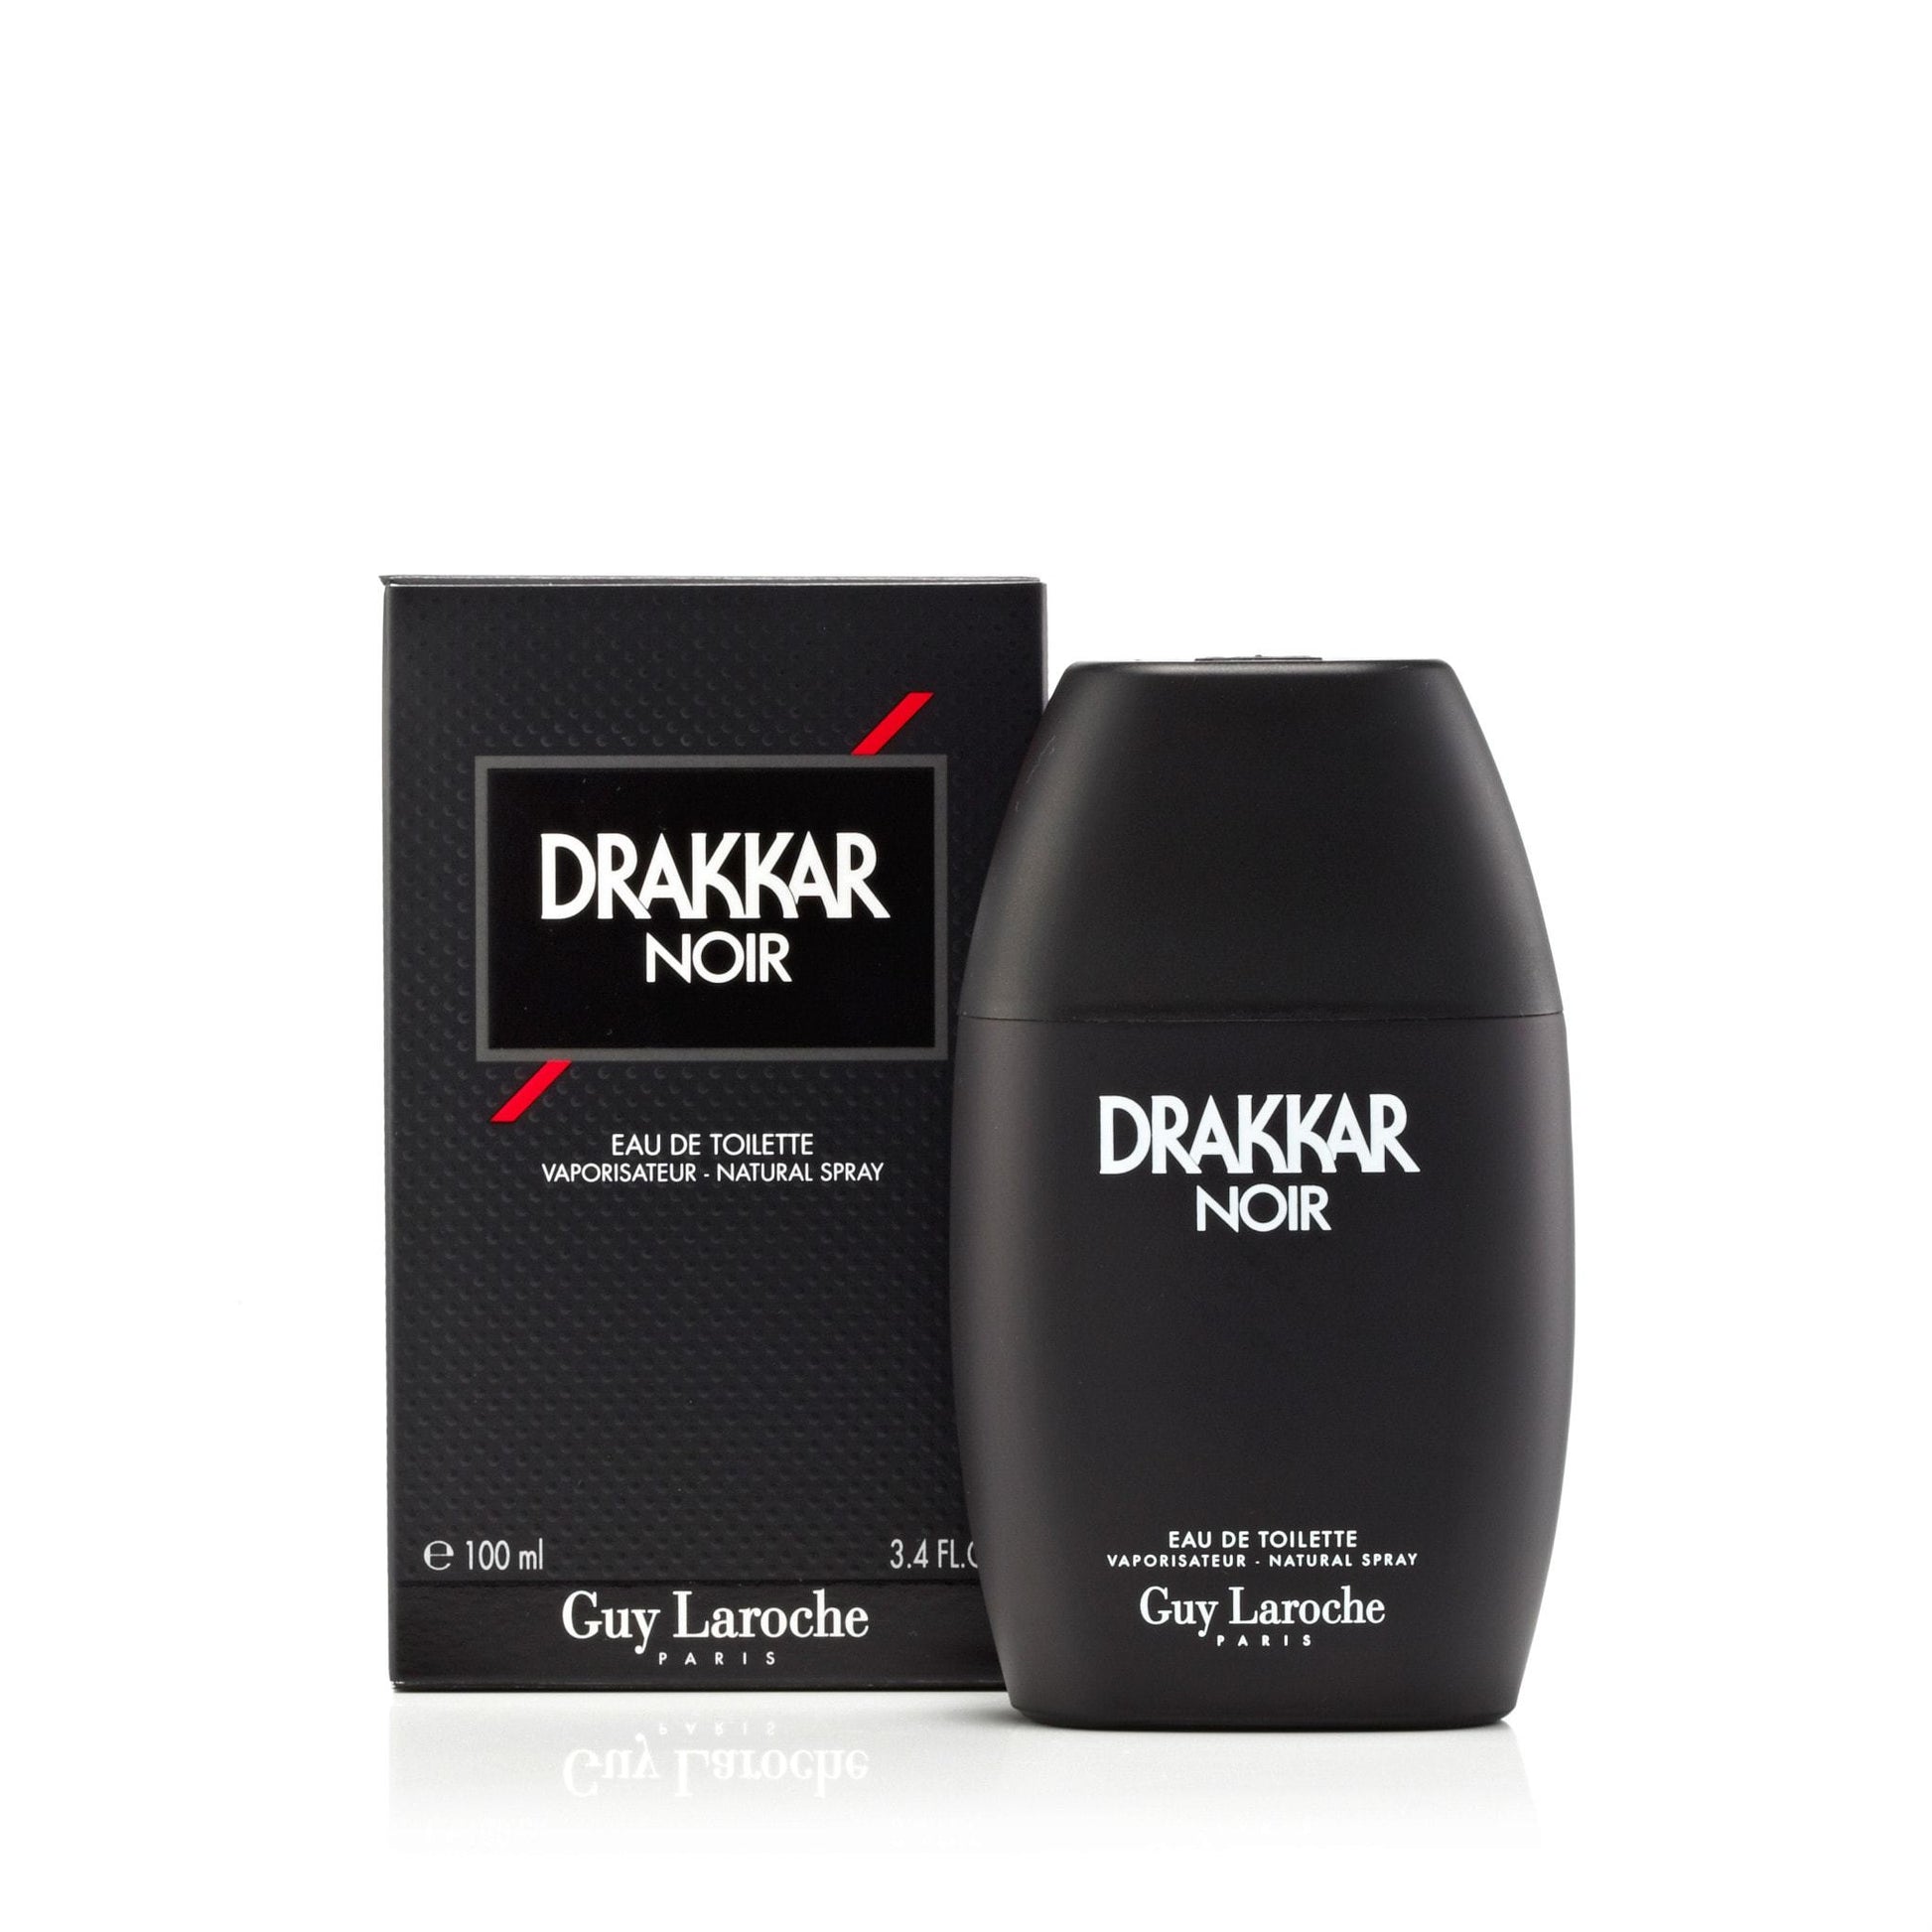 Drakkar Noir Eau de Toilette Spray for Men by Guy Laroche, Product image 7